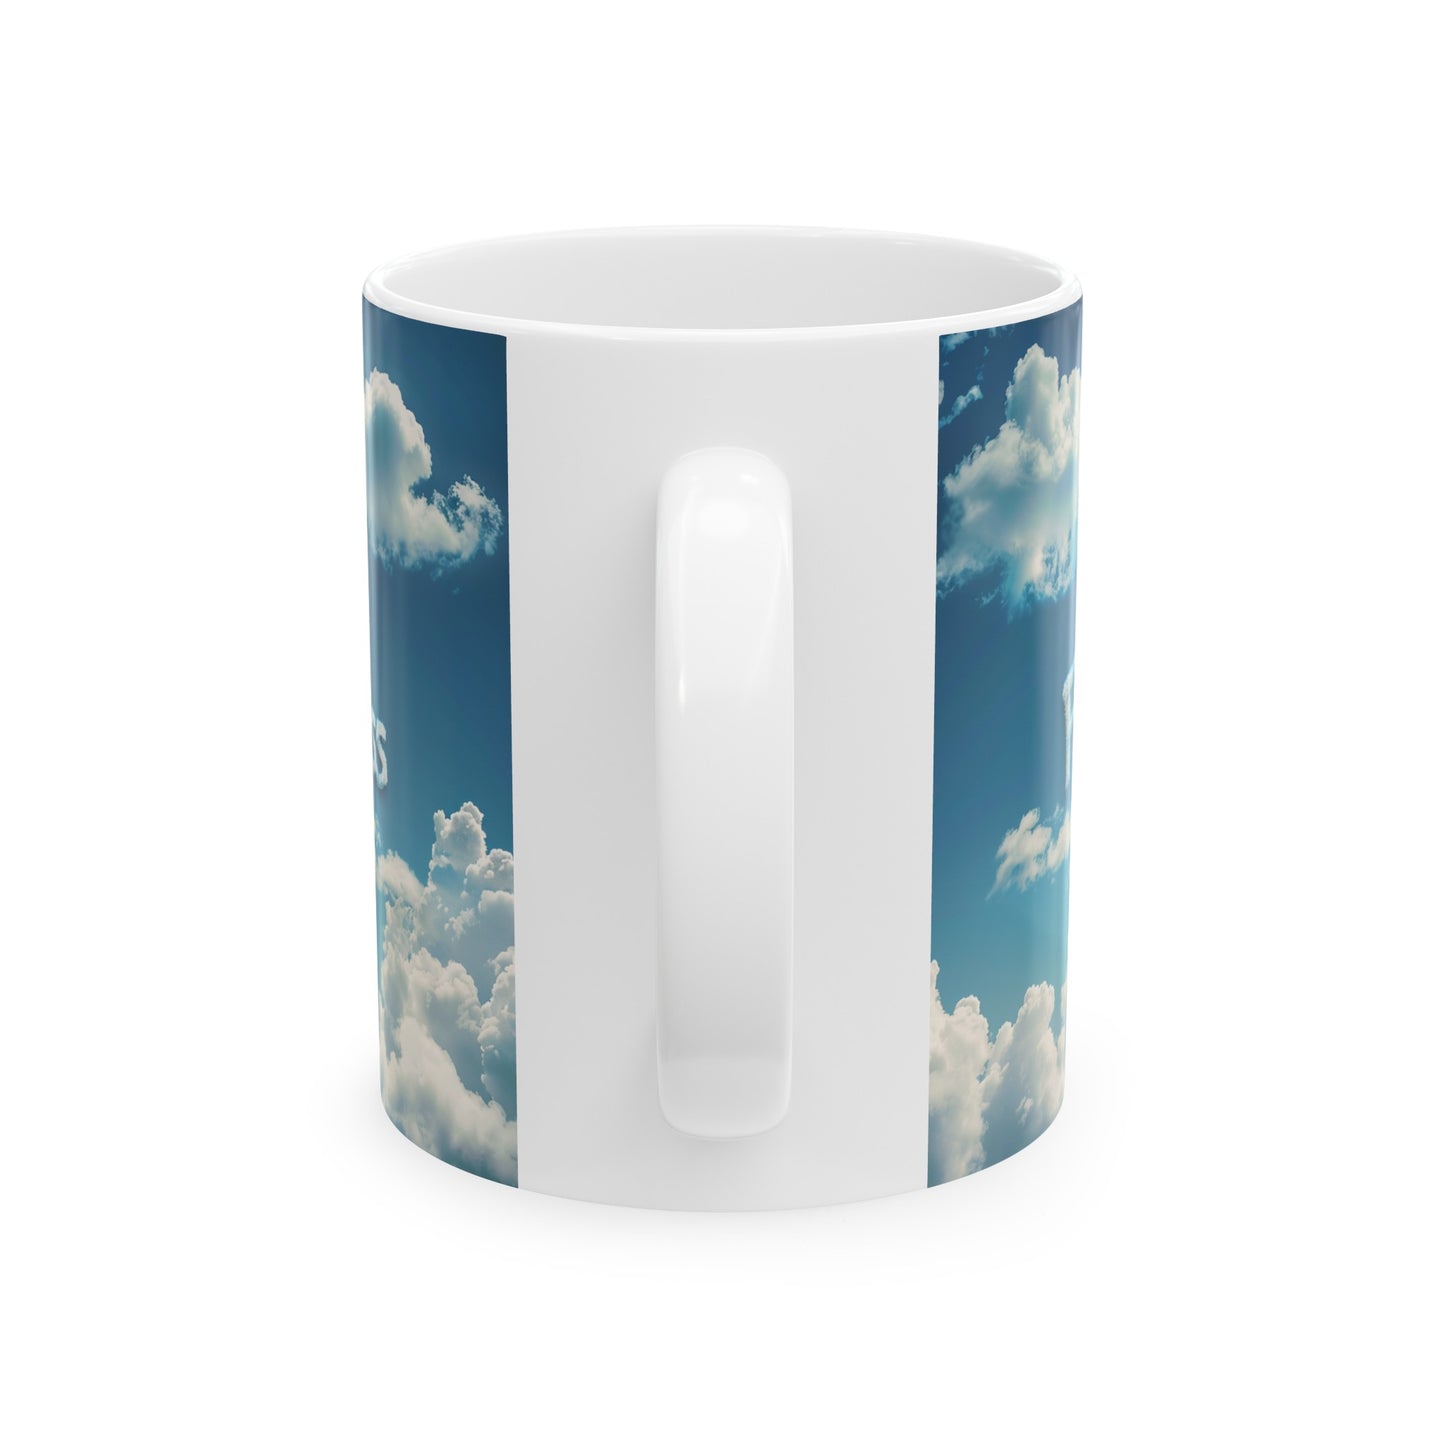 Ceramic Mug, (11oz, 15oz) - Be Fearless